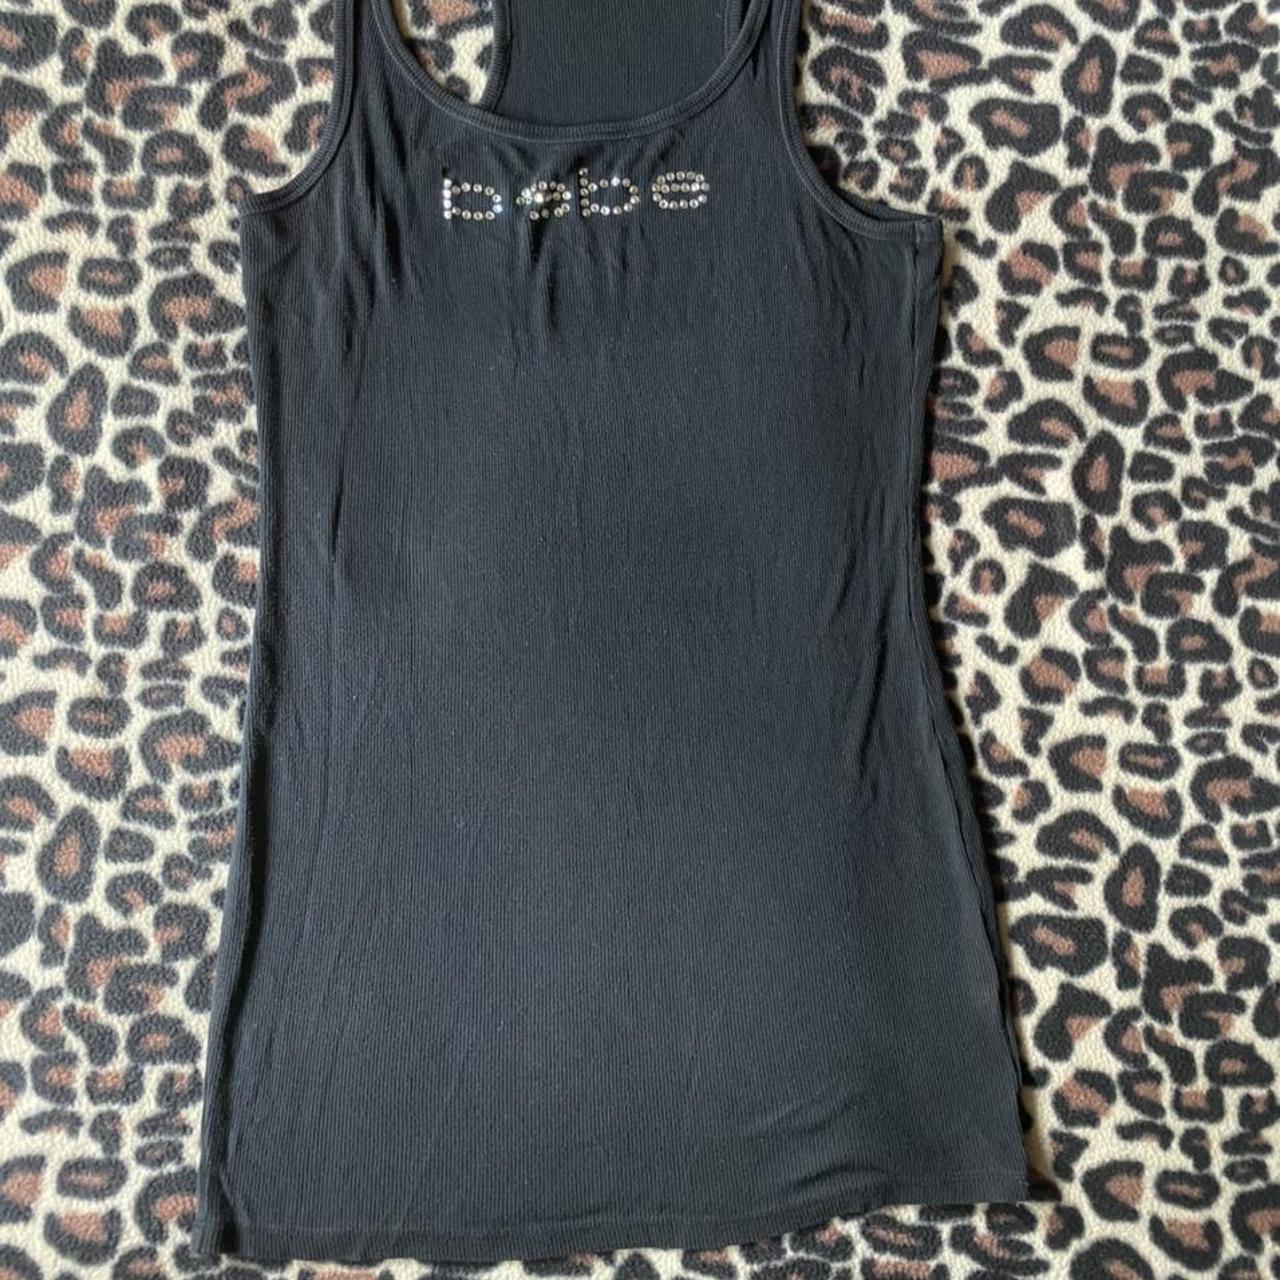 Product Image 1 - Vintage bebe mini dress. Black,